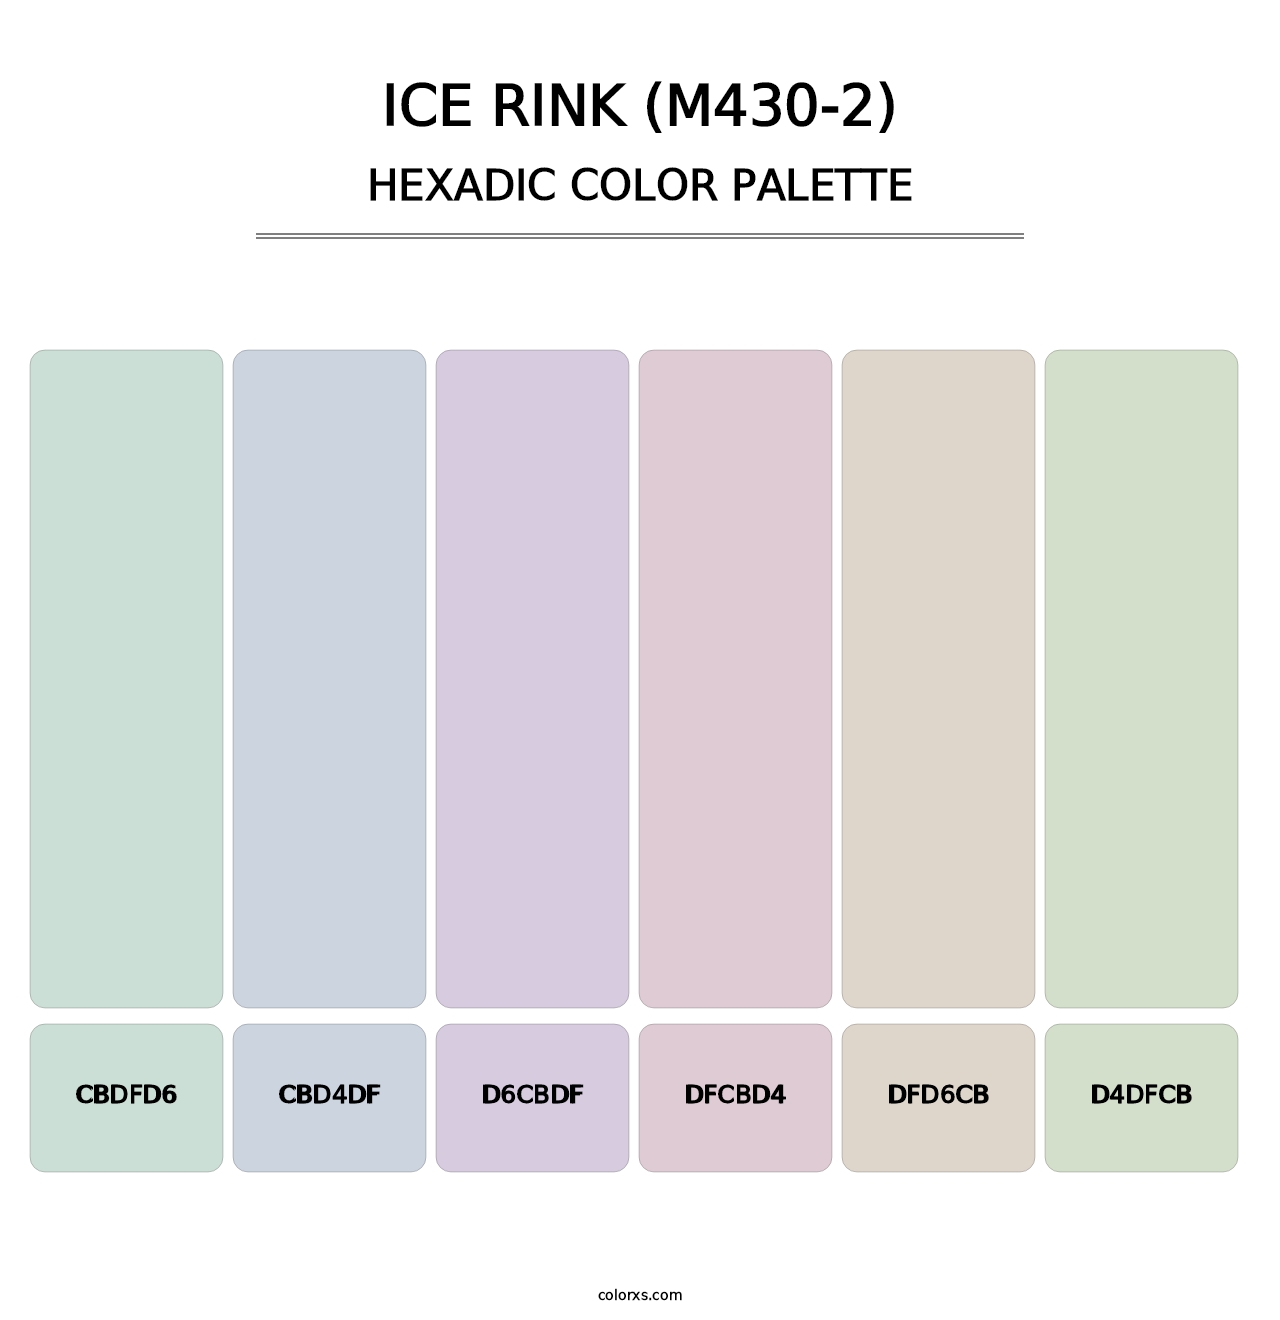 Ice Rink (M430-2) - Hexadic Color Palette